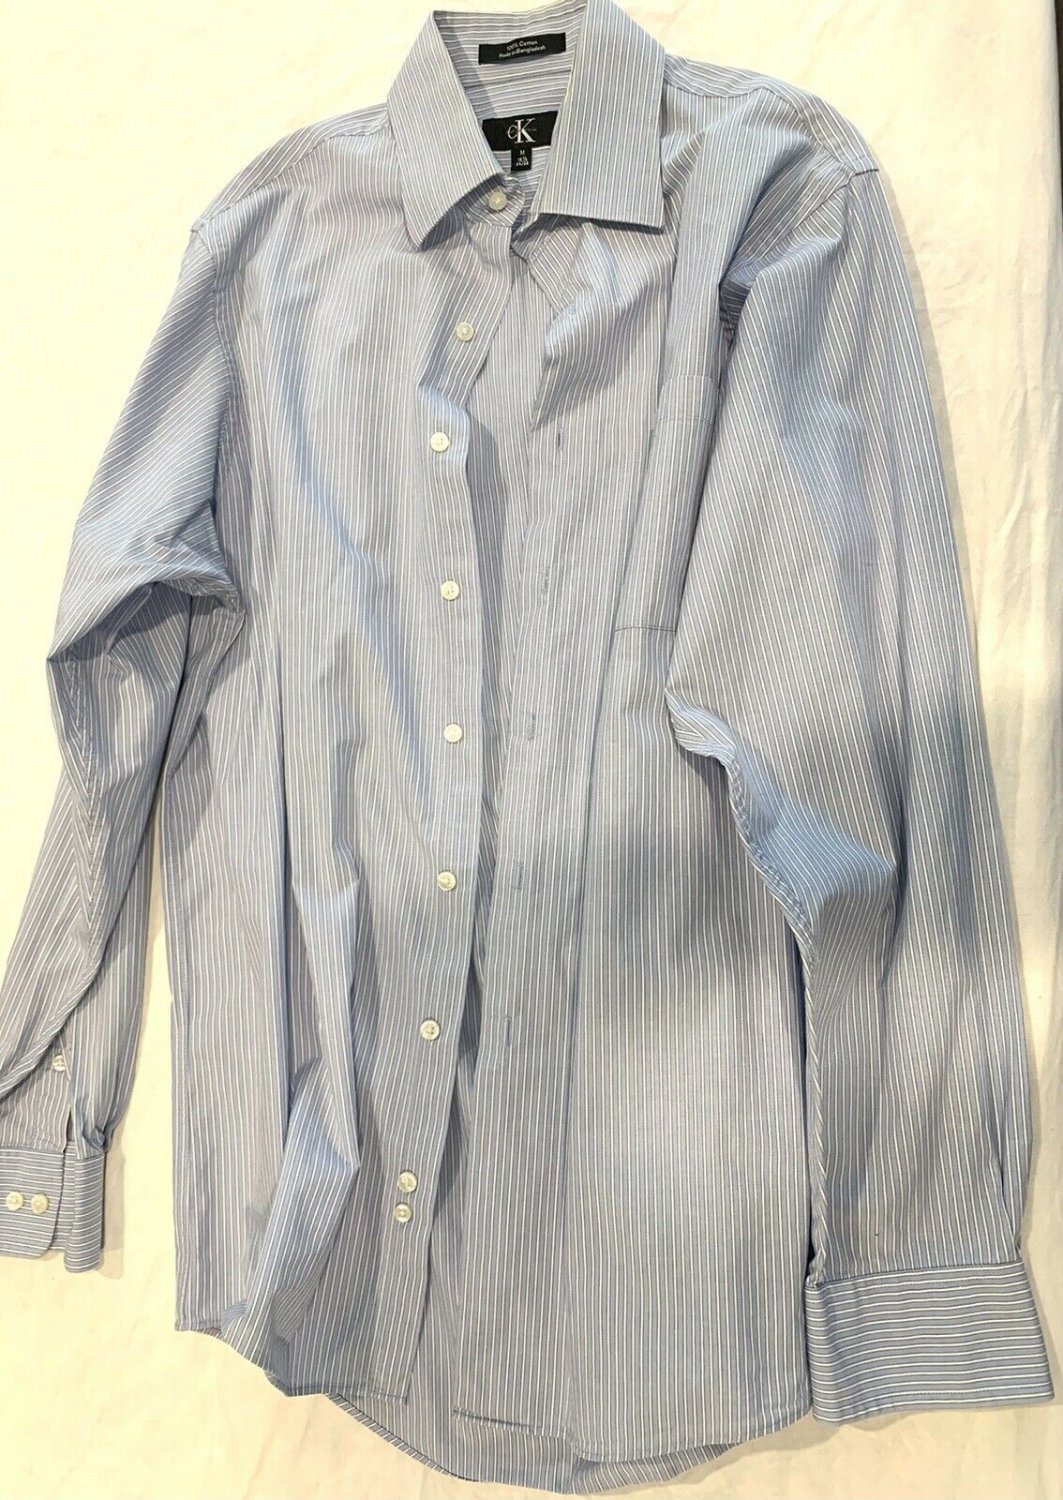 6 Men’s Long Sleeve Buttoned Down Dress Shirts (15.5” x 34/35”)